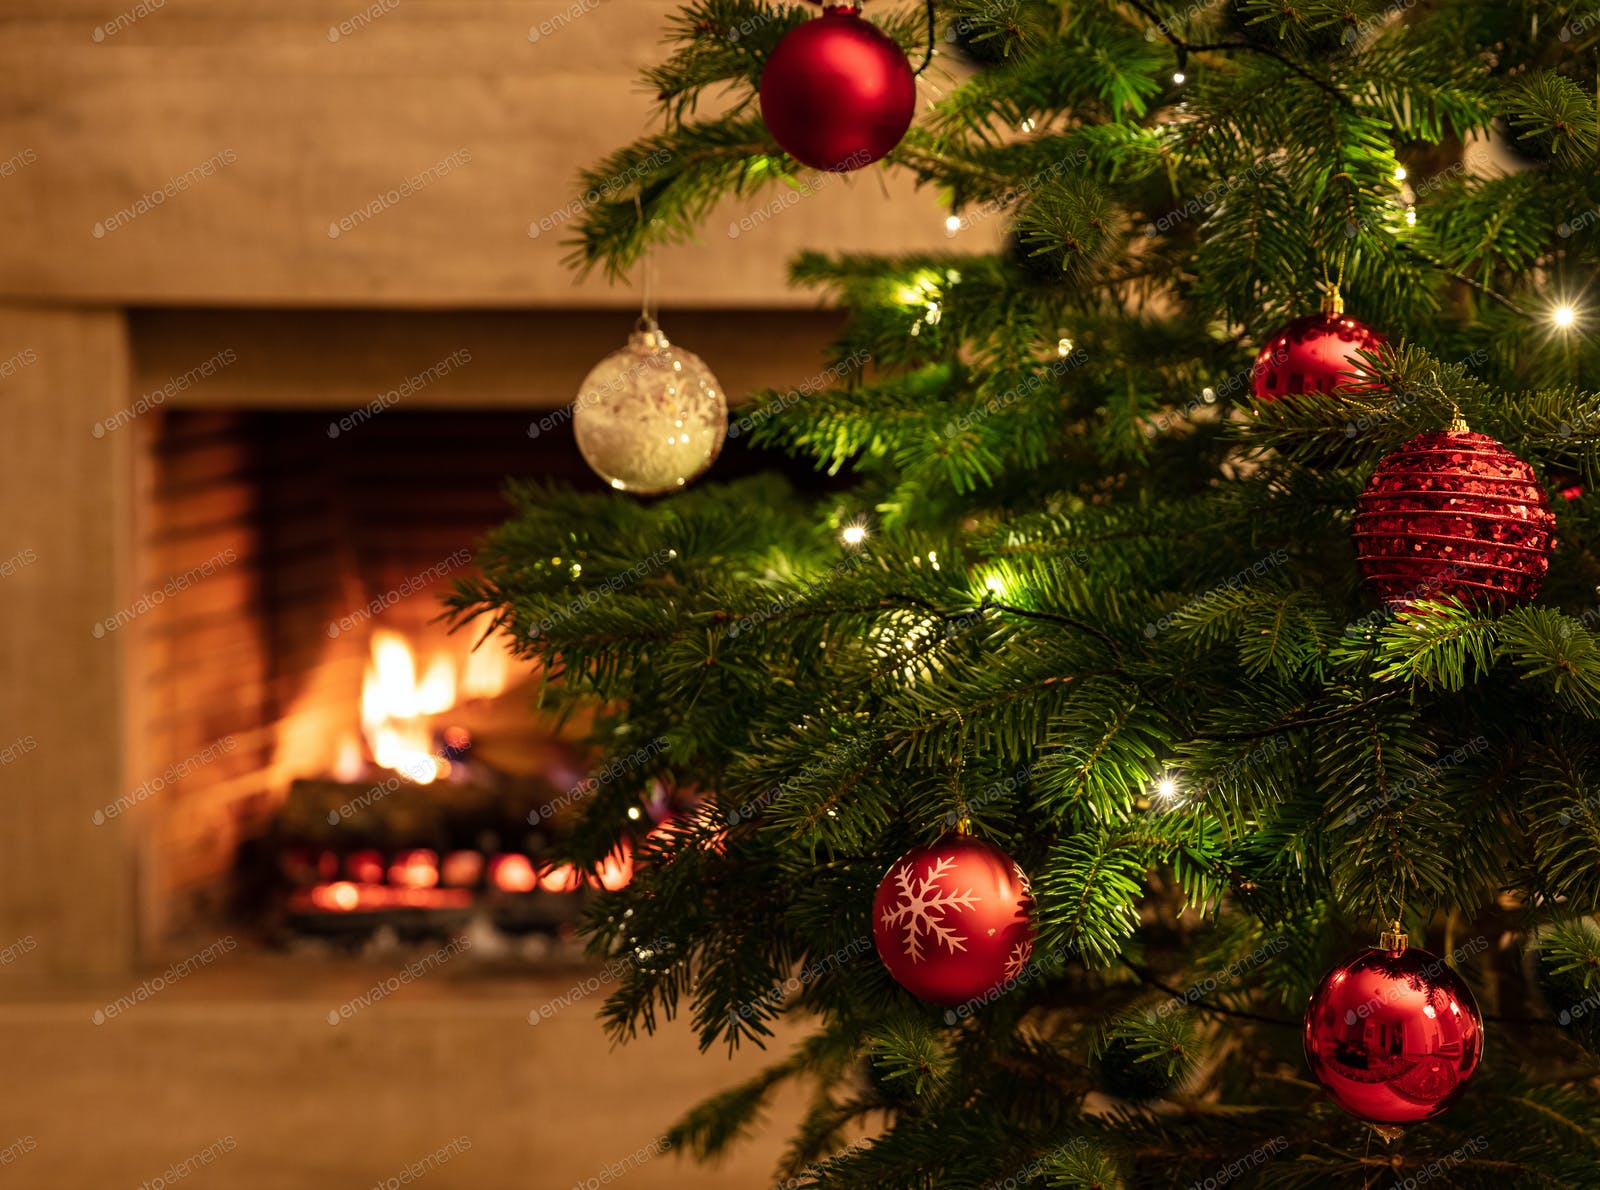 Christmas tree close up on burning fireplace background photo by rawf8 on Envato Elements